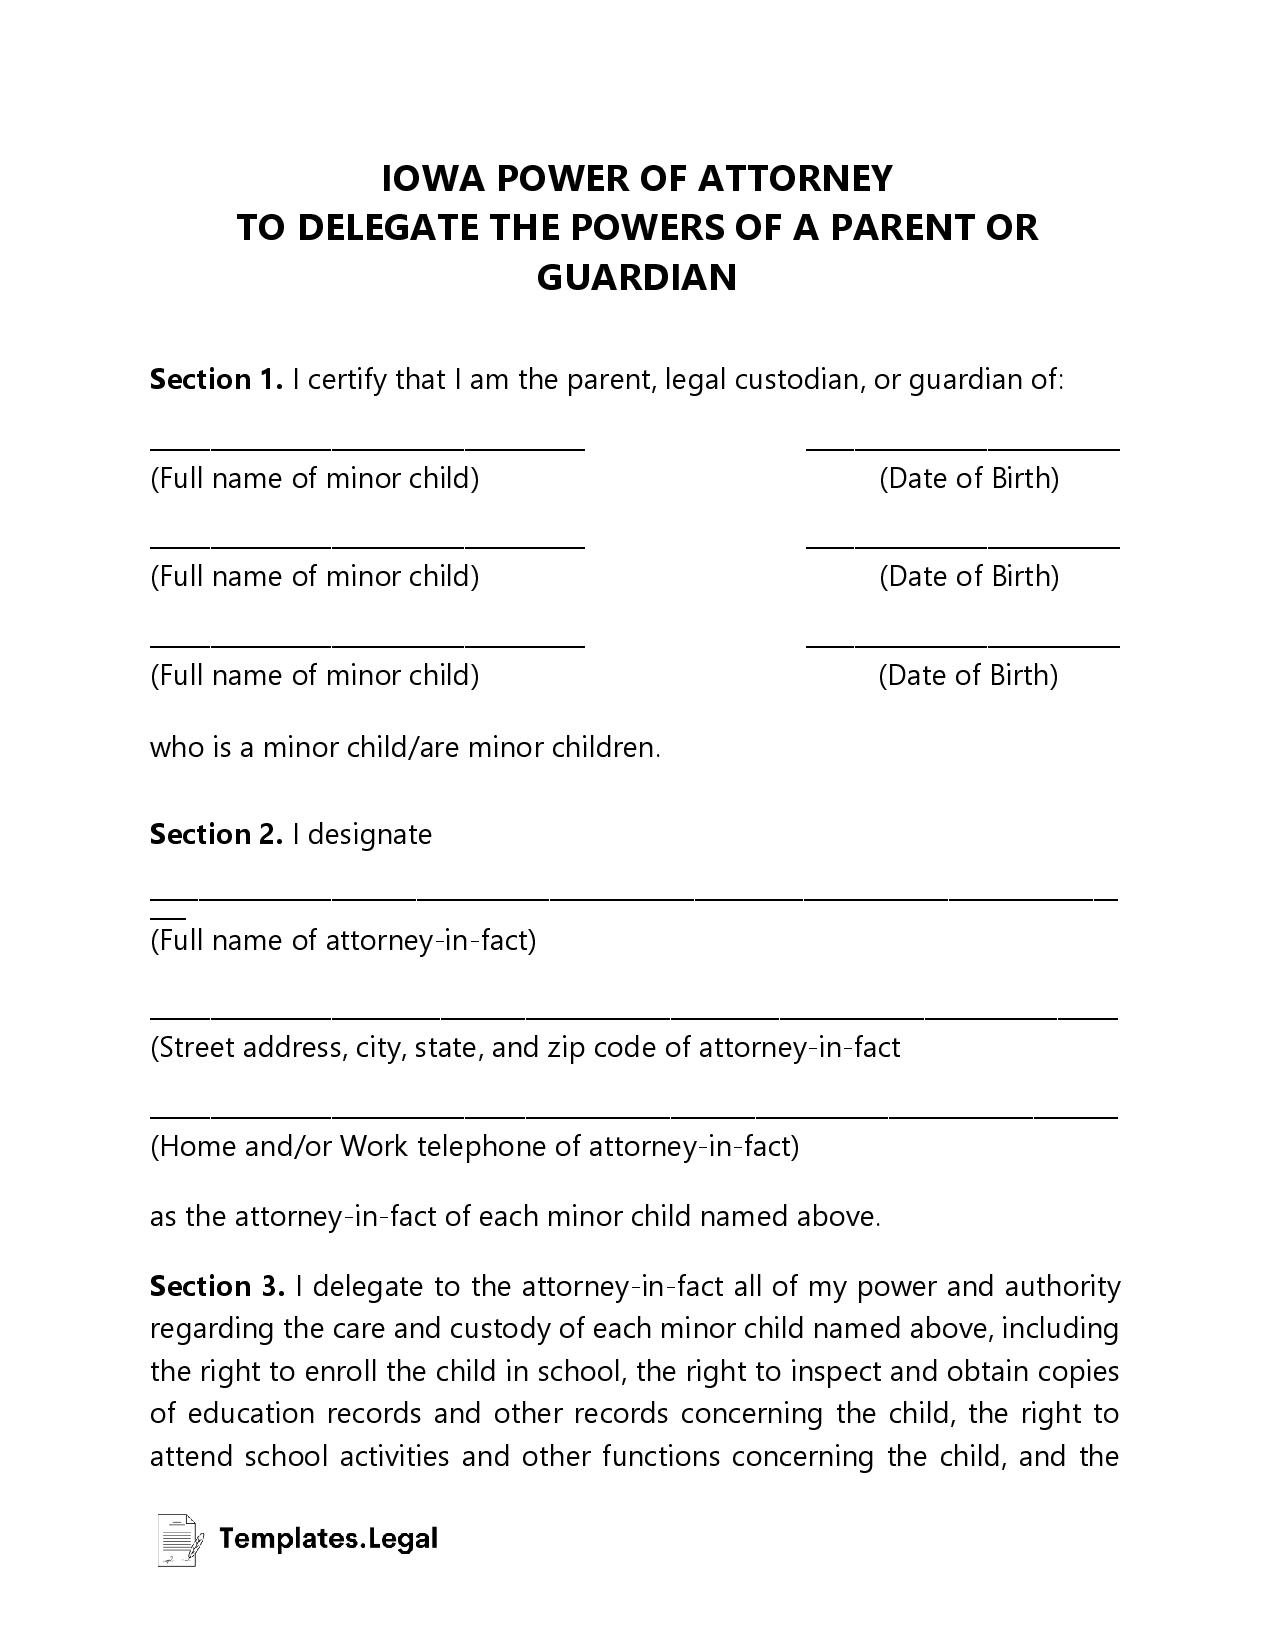 Iowa Minor (Child) Power of Attorney - Templates.Legal